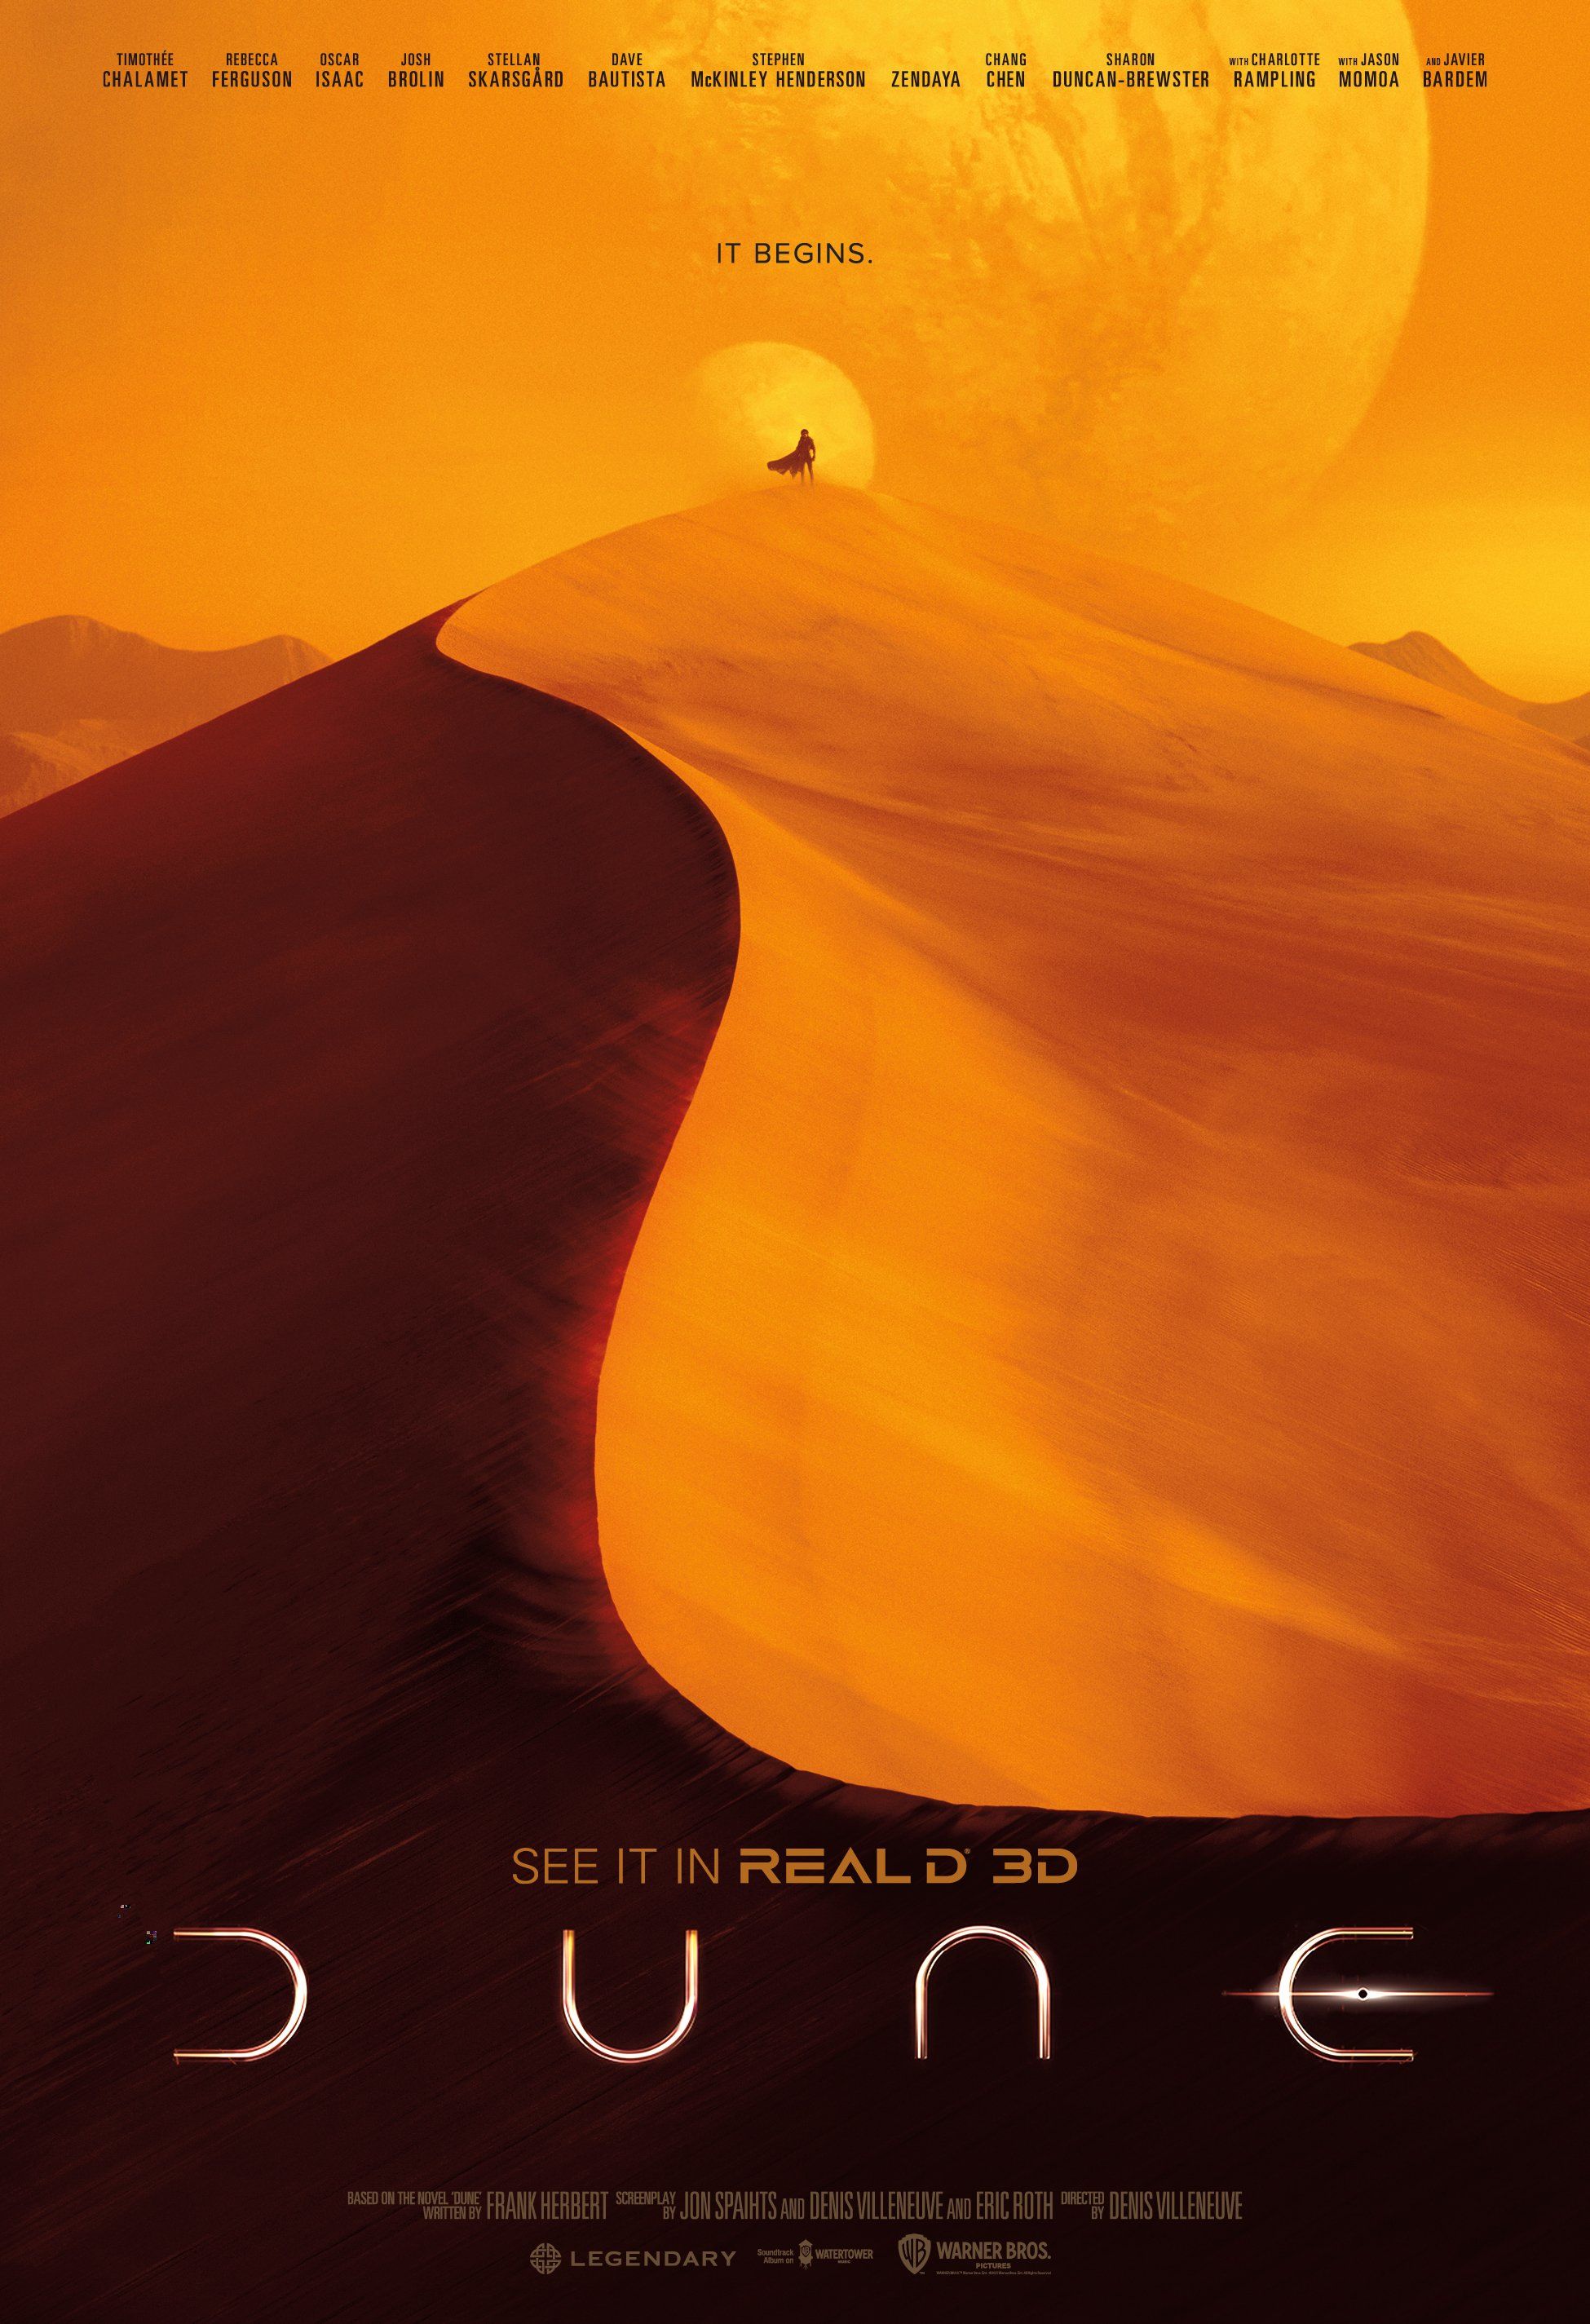 Dune poster of giant dune